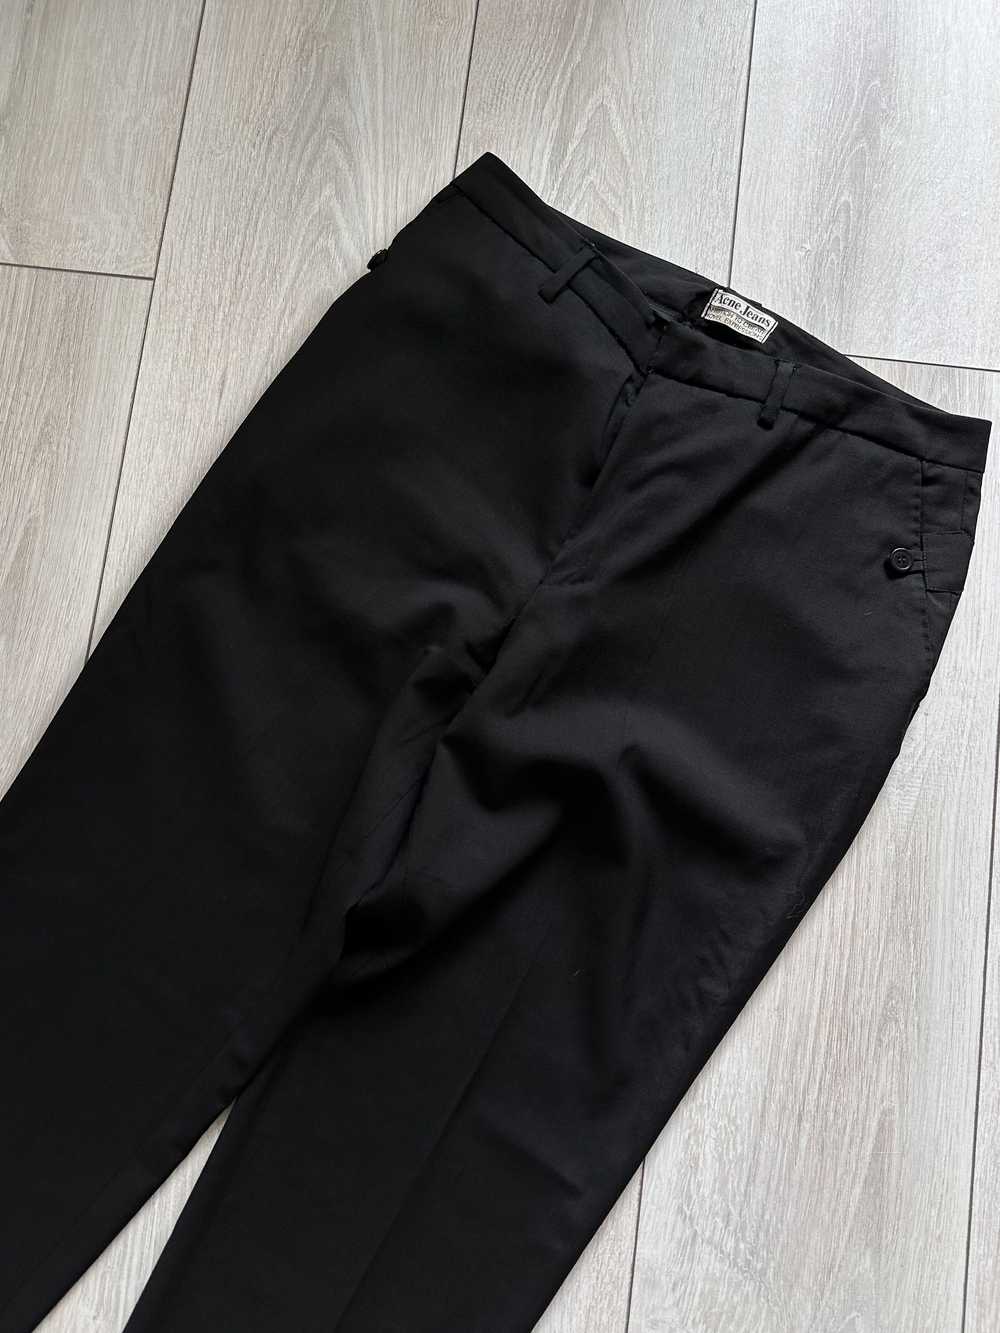 Acne Studios Acne Studios Dress Trousers Pants - image 8